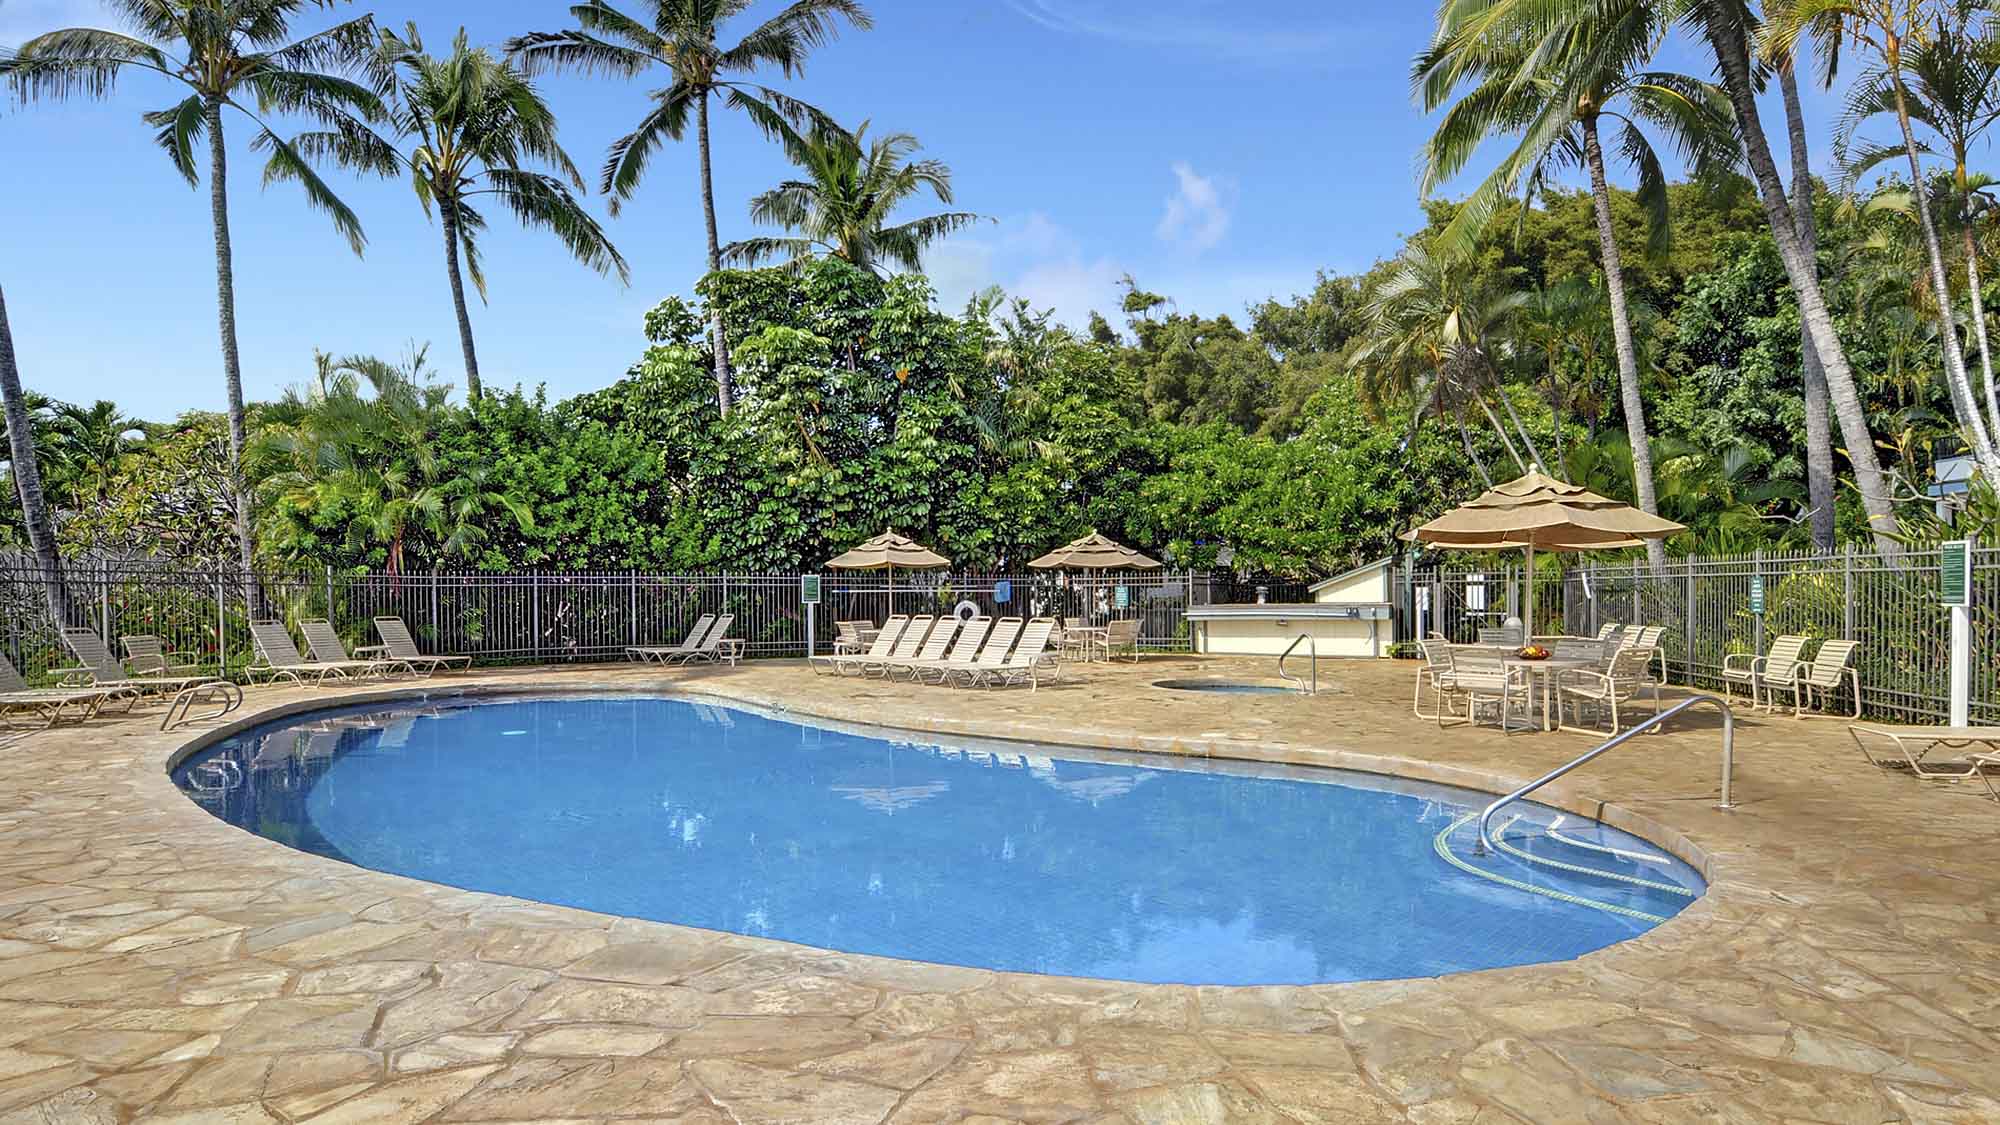 Poipu Kai Resort - Community Pool - Parrish Kauai